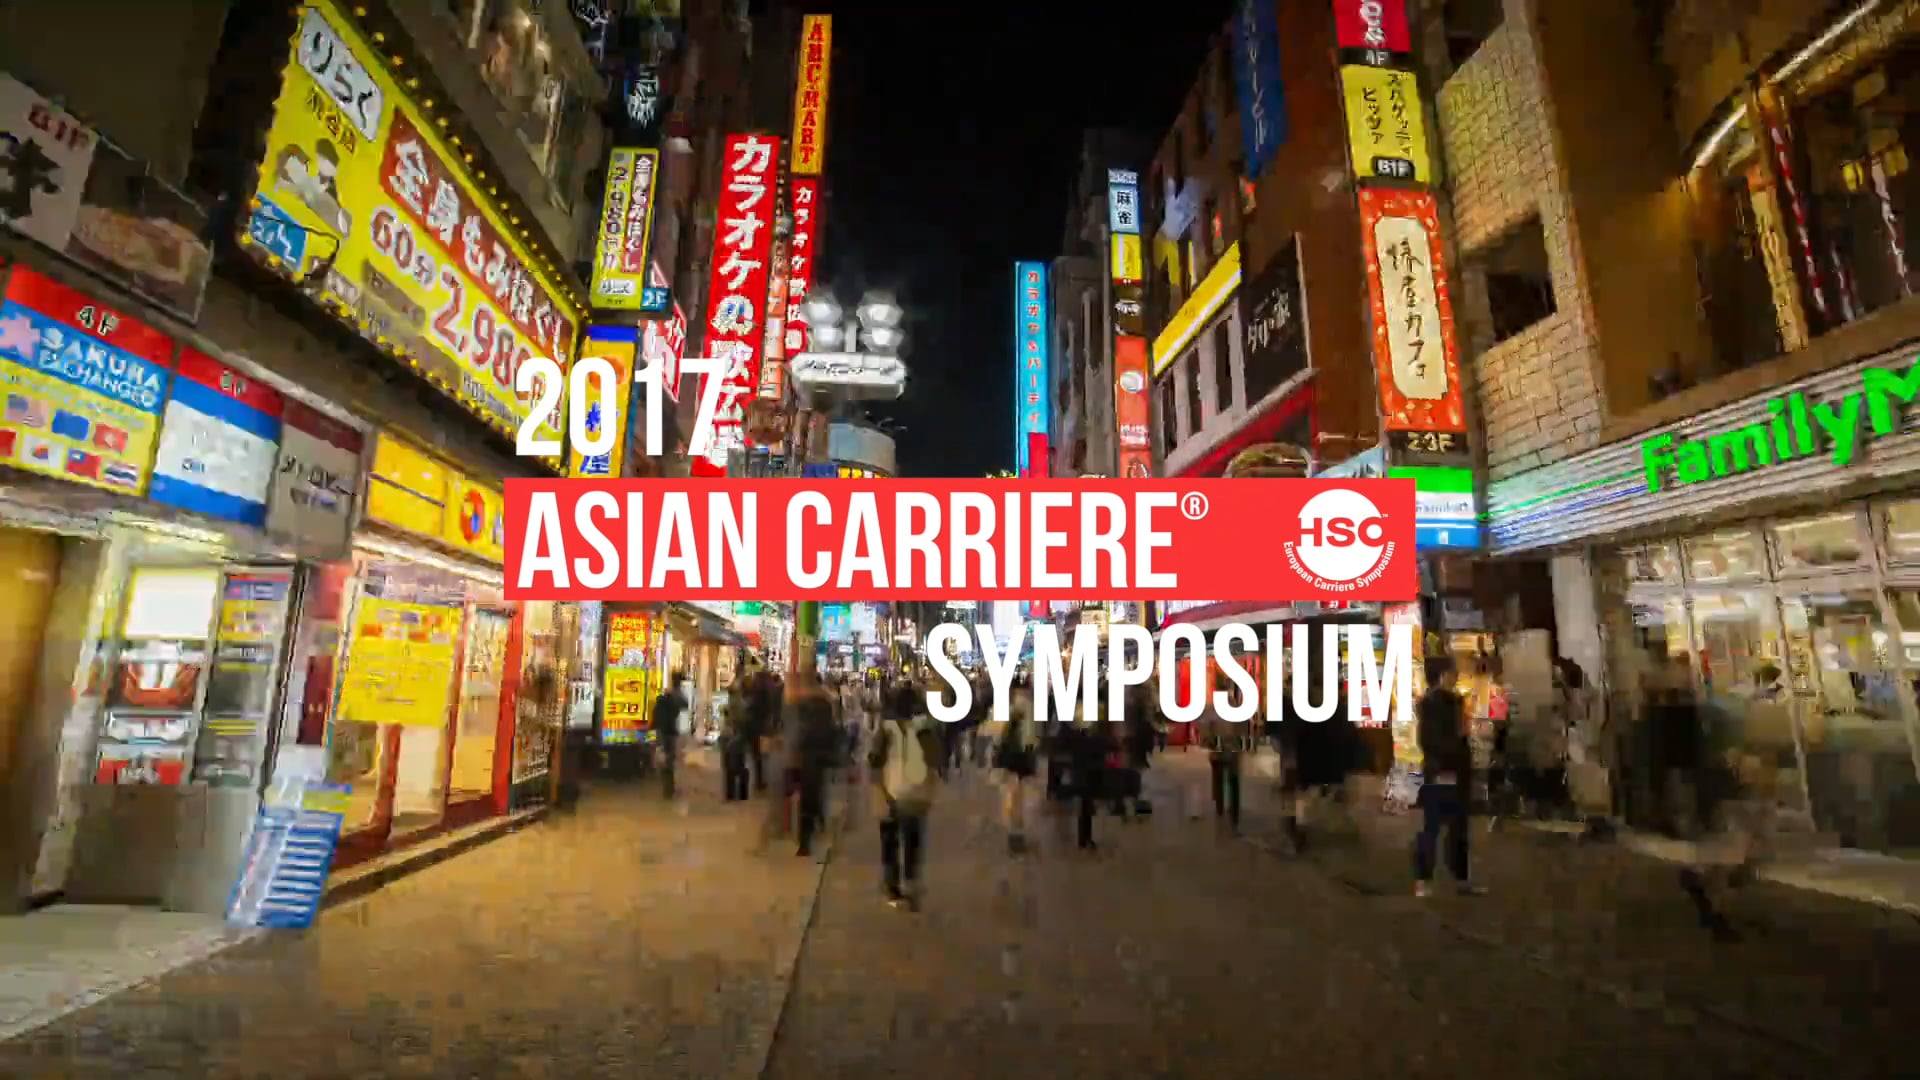 2017 Asian Carriere Symposium (アジアン カリエール シンポジウム）